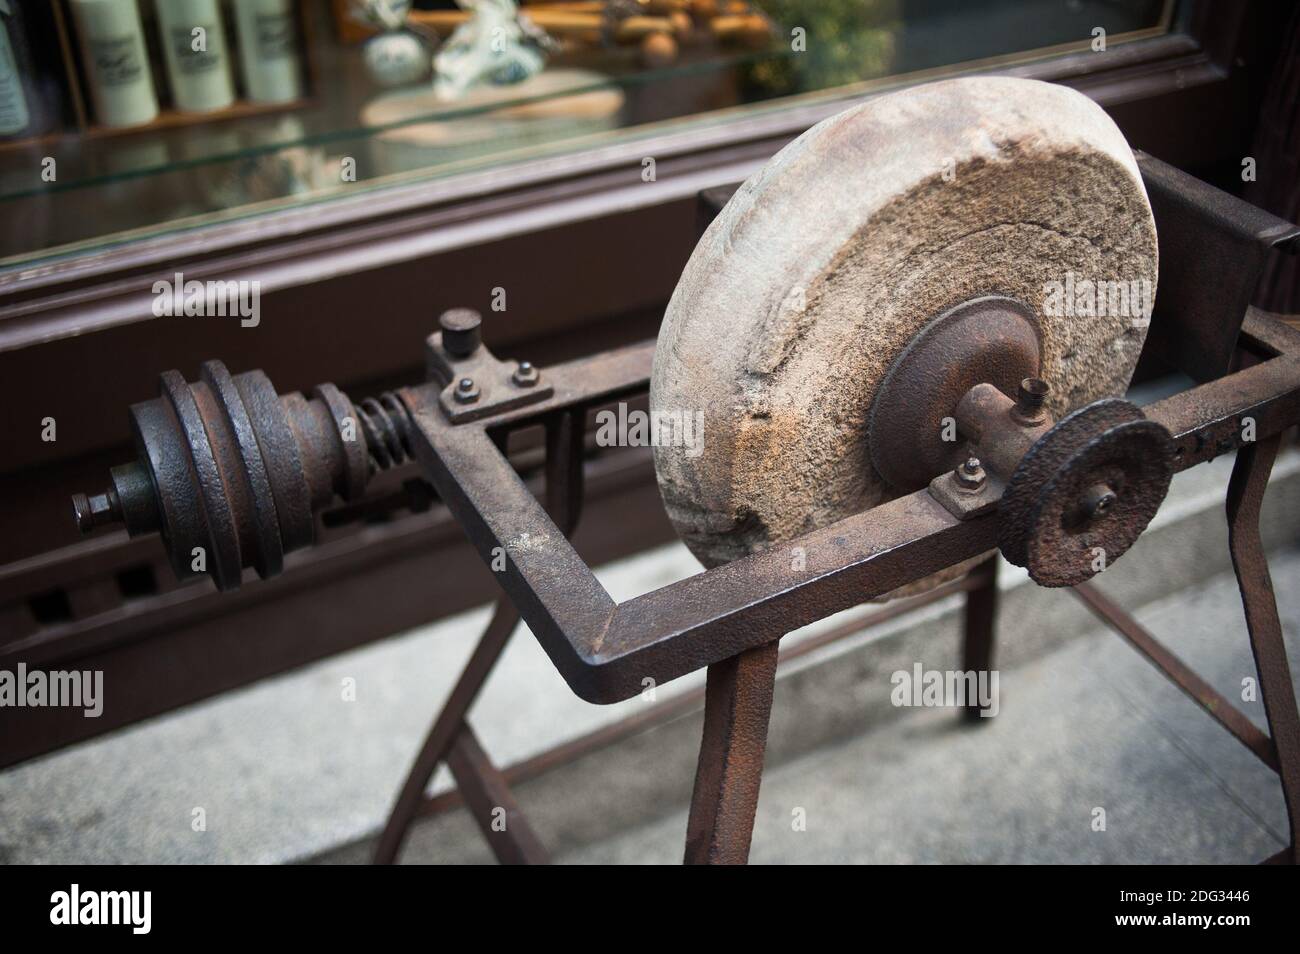 https://c8.alamy.com/comp/2DG3446/antique-sharpening-wheel-closeup-otdoors-2DG3446.jpg